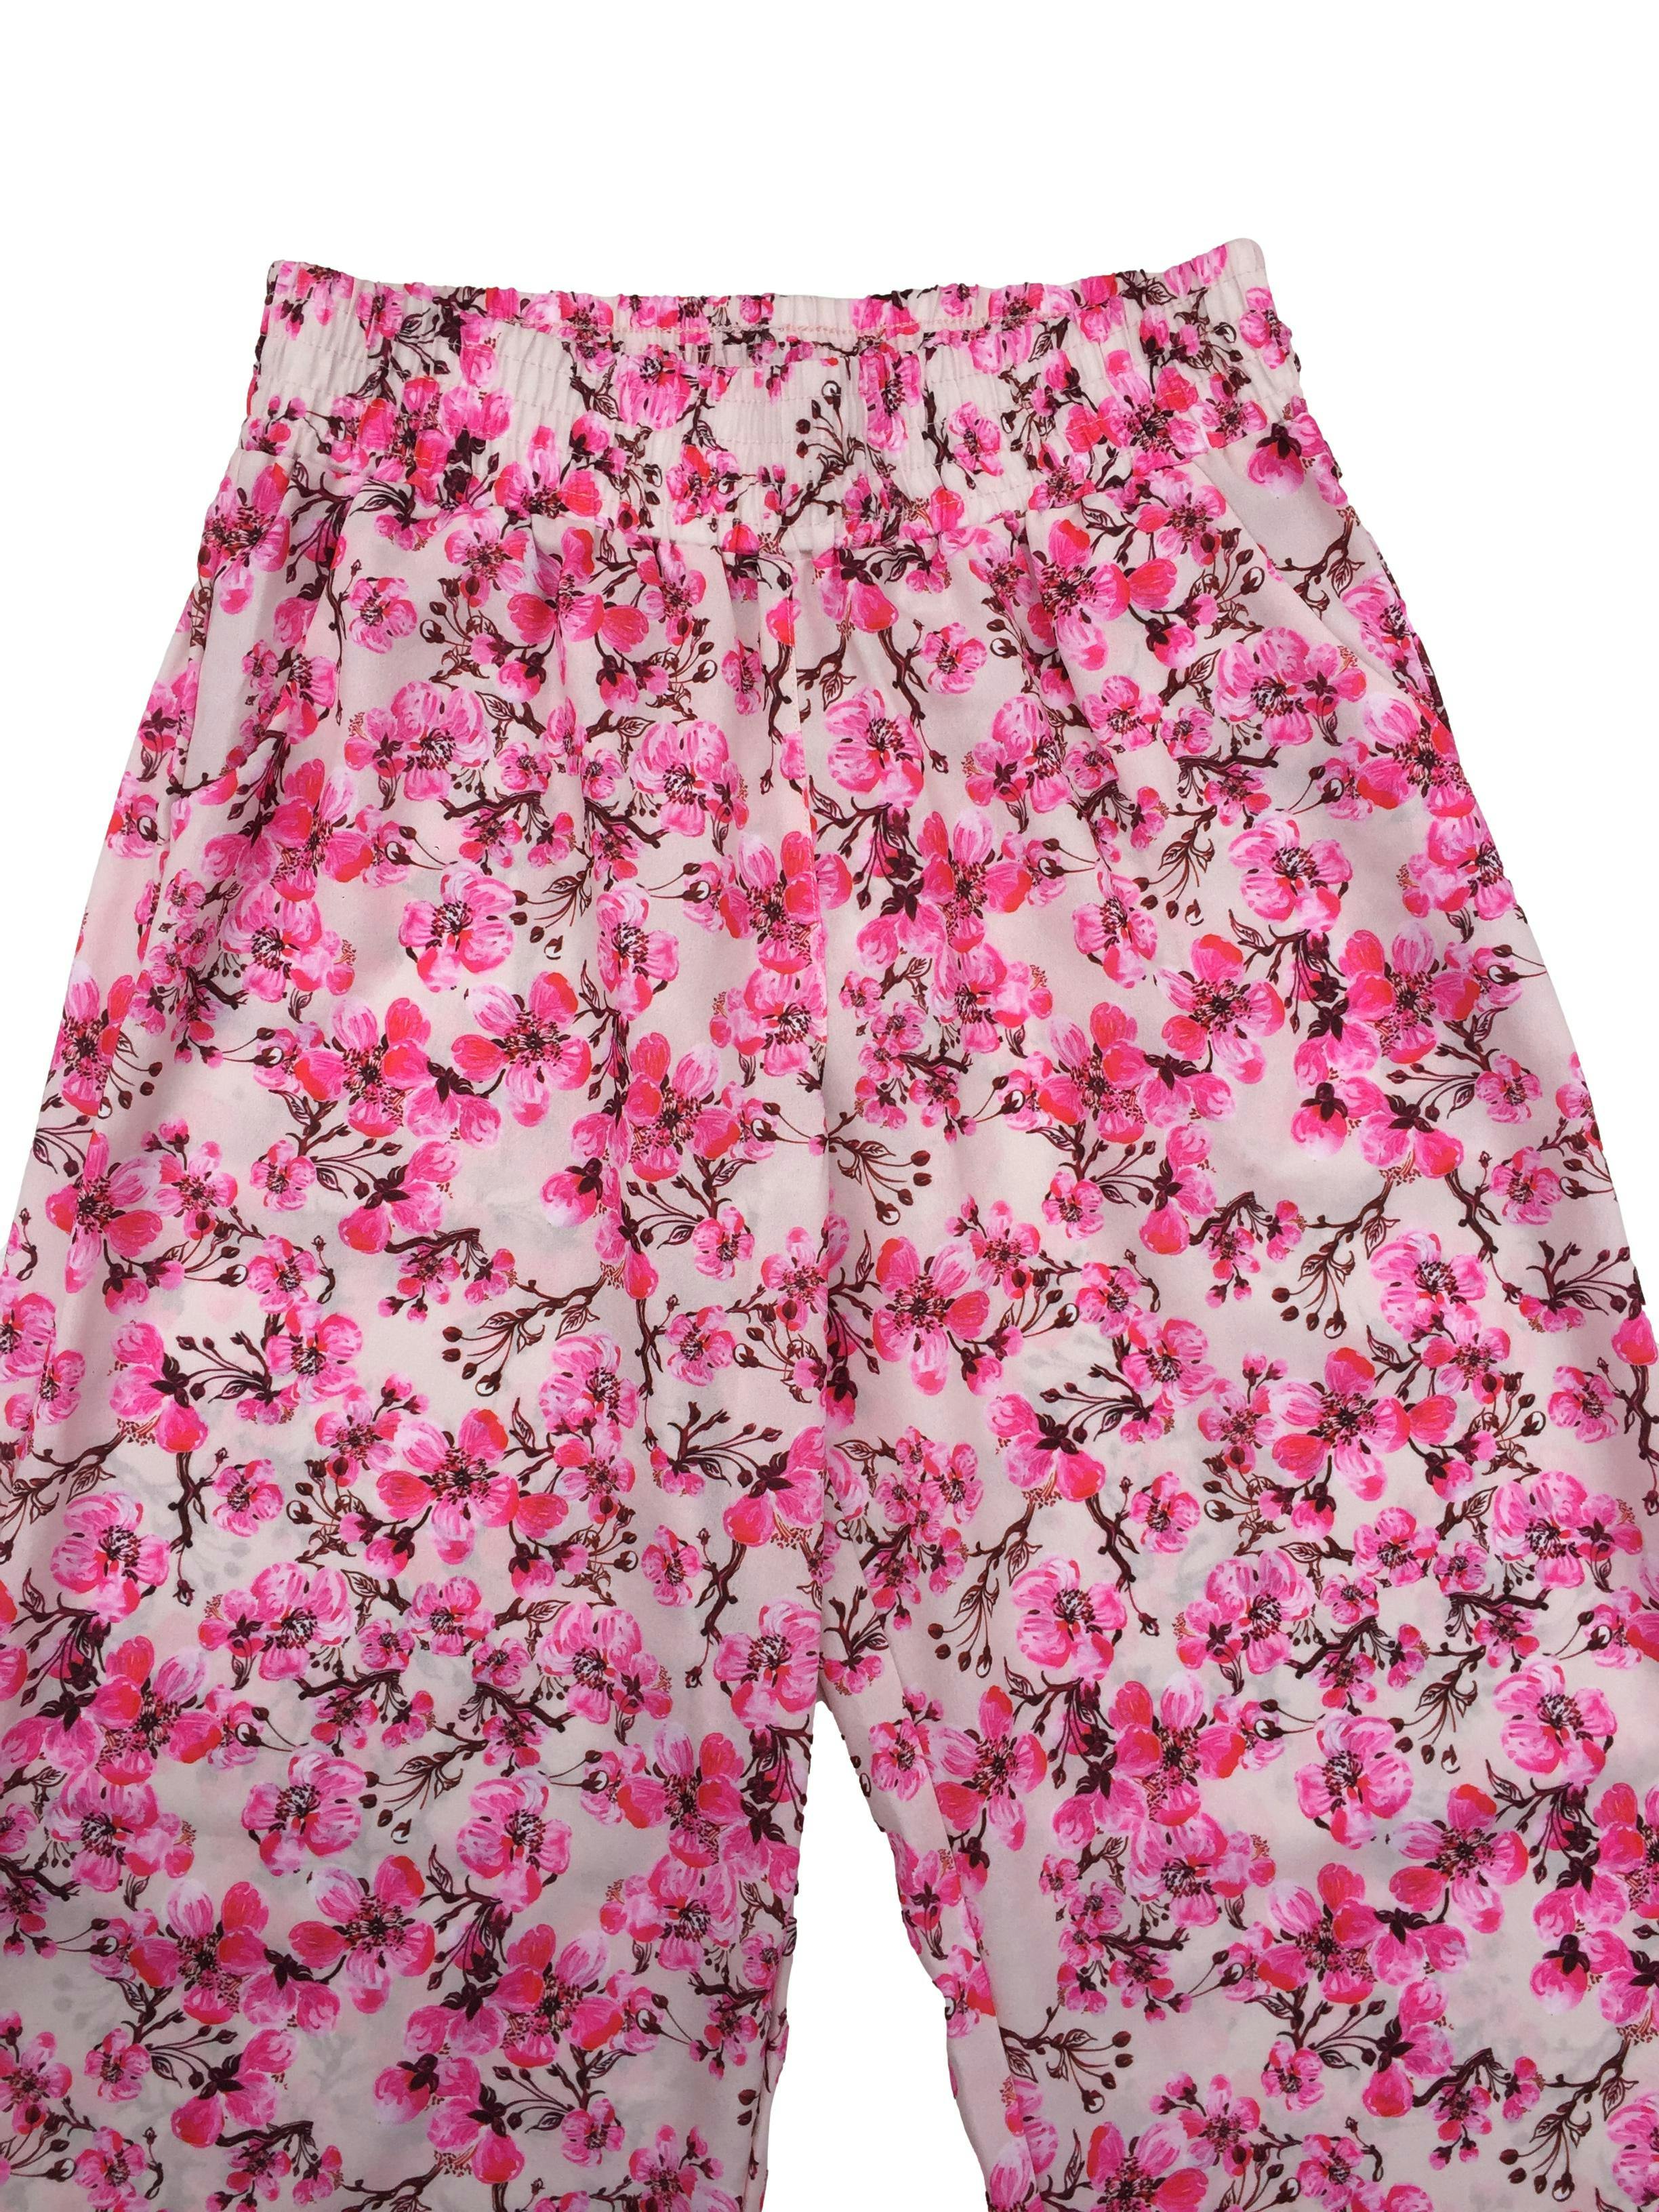 Pantalón Zonia de pierna ancha palo rosa con flores neón, bolsillos laterales y pretina elástica. Cintura 70cm Tiro 30cm Largo 95cm